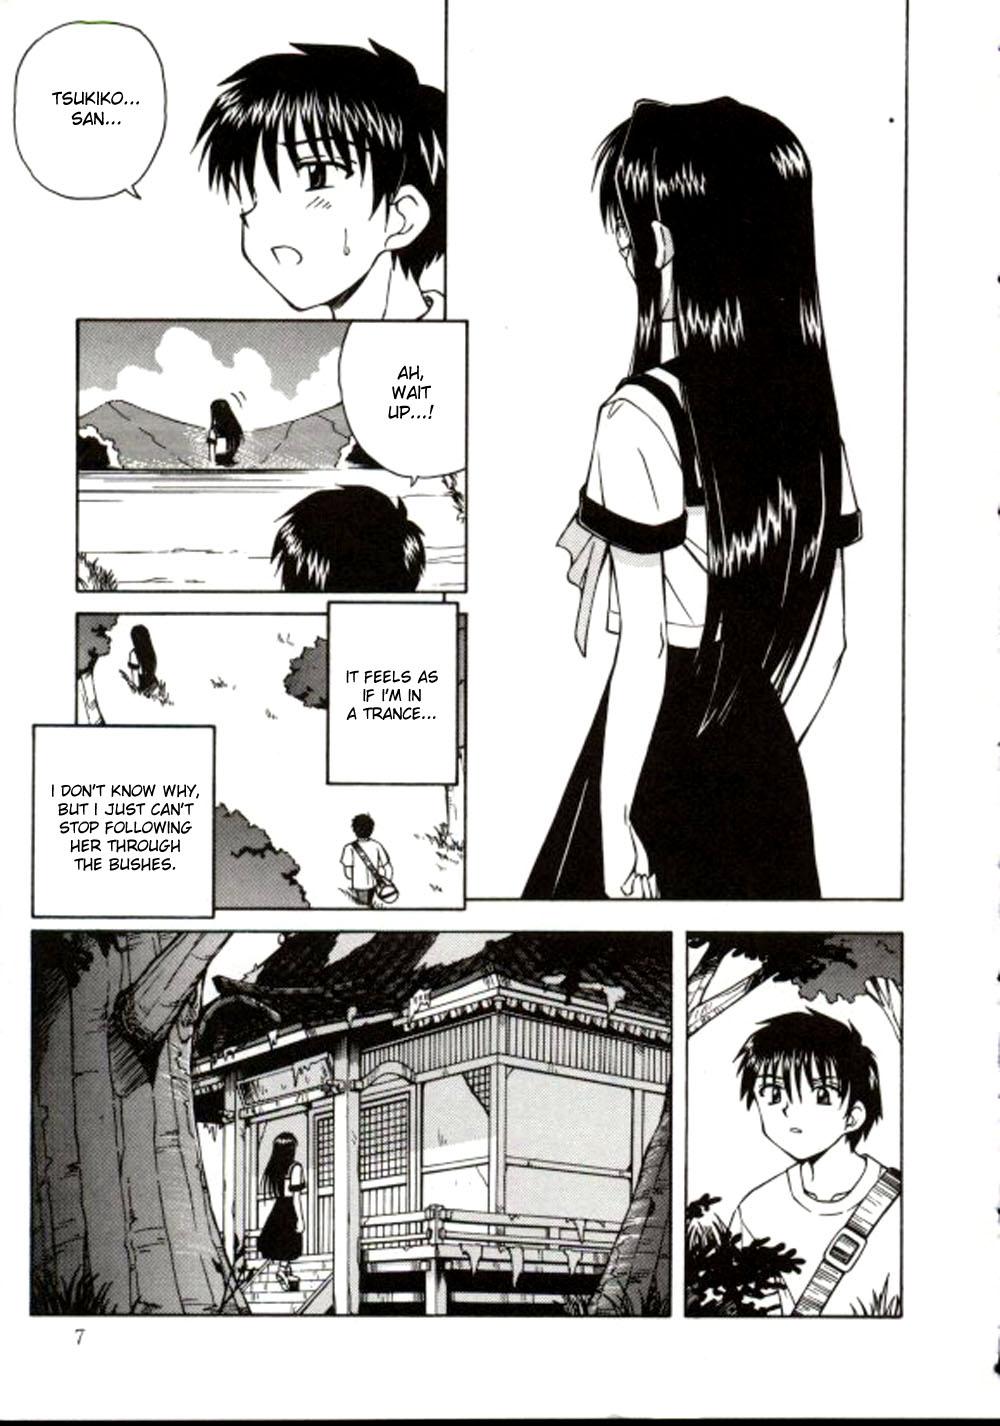 Short Hair Shiruwo Suunawa Bunduda - Page 7